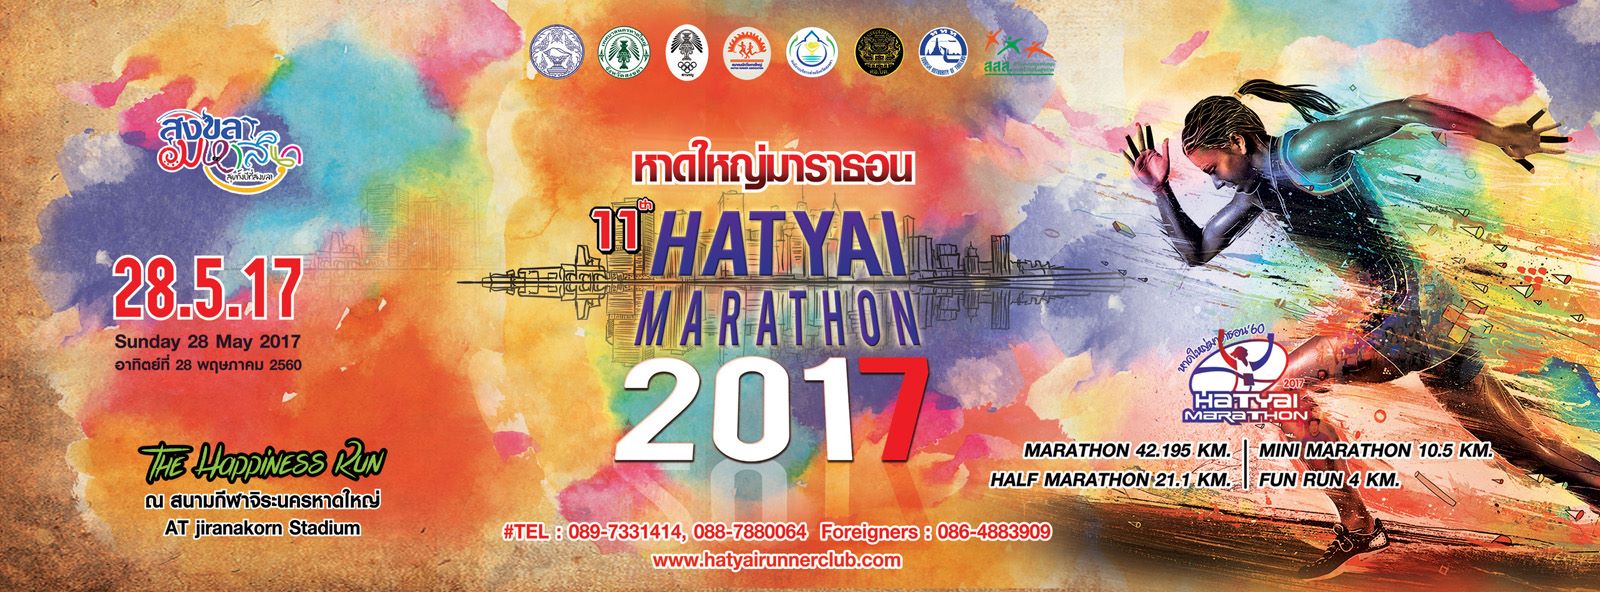 Hatyai Marathon 2017